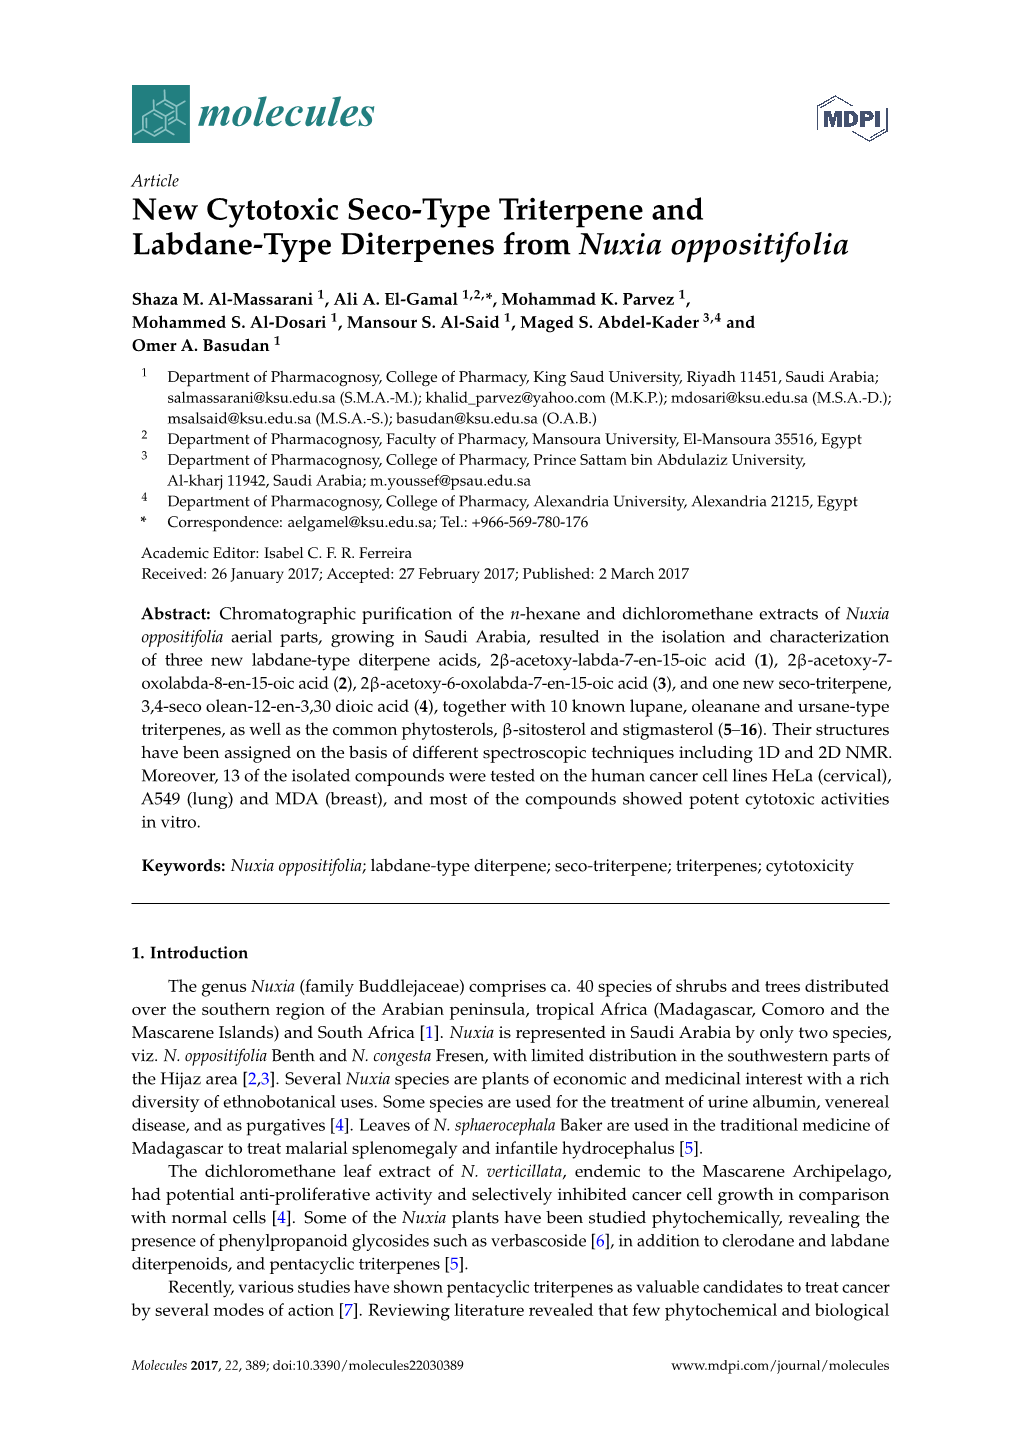 New Cytotoxic Seco-Type Triterpene and Labdane-Type Diterpenes from Nuxia Oppositifolia